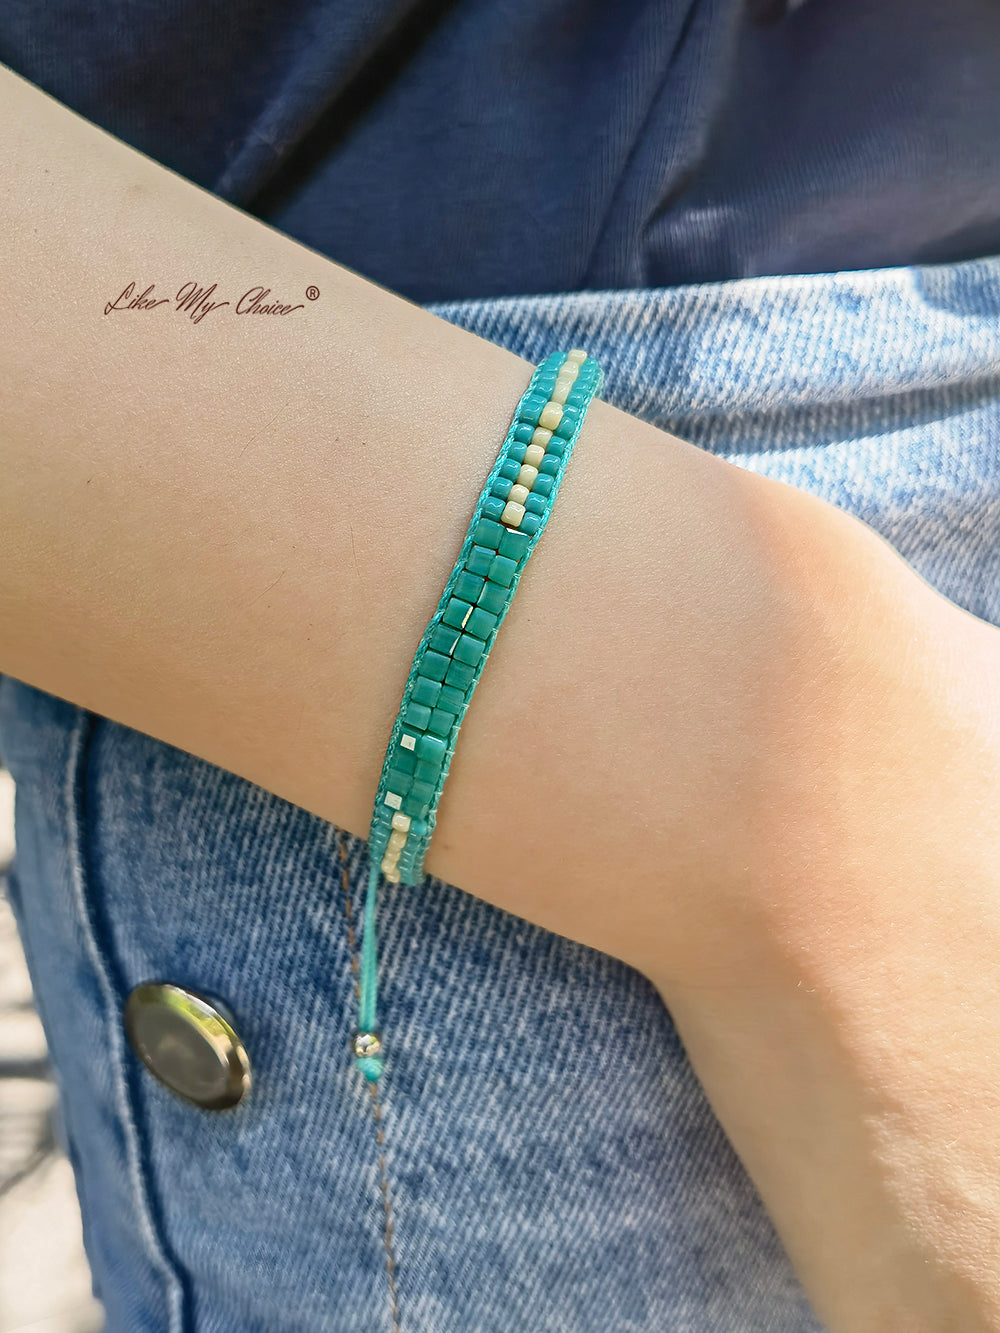 Adjustable Drawstring Beaded Bracelet Turquoise Beach